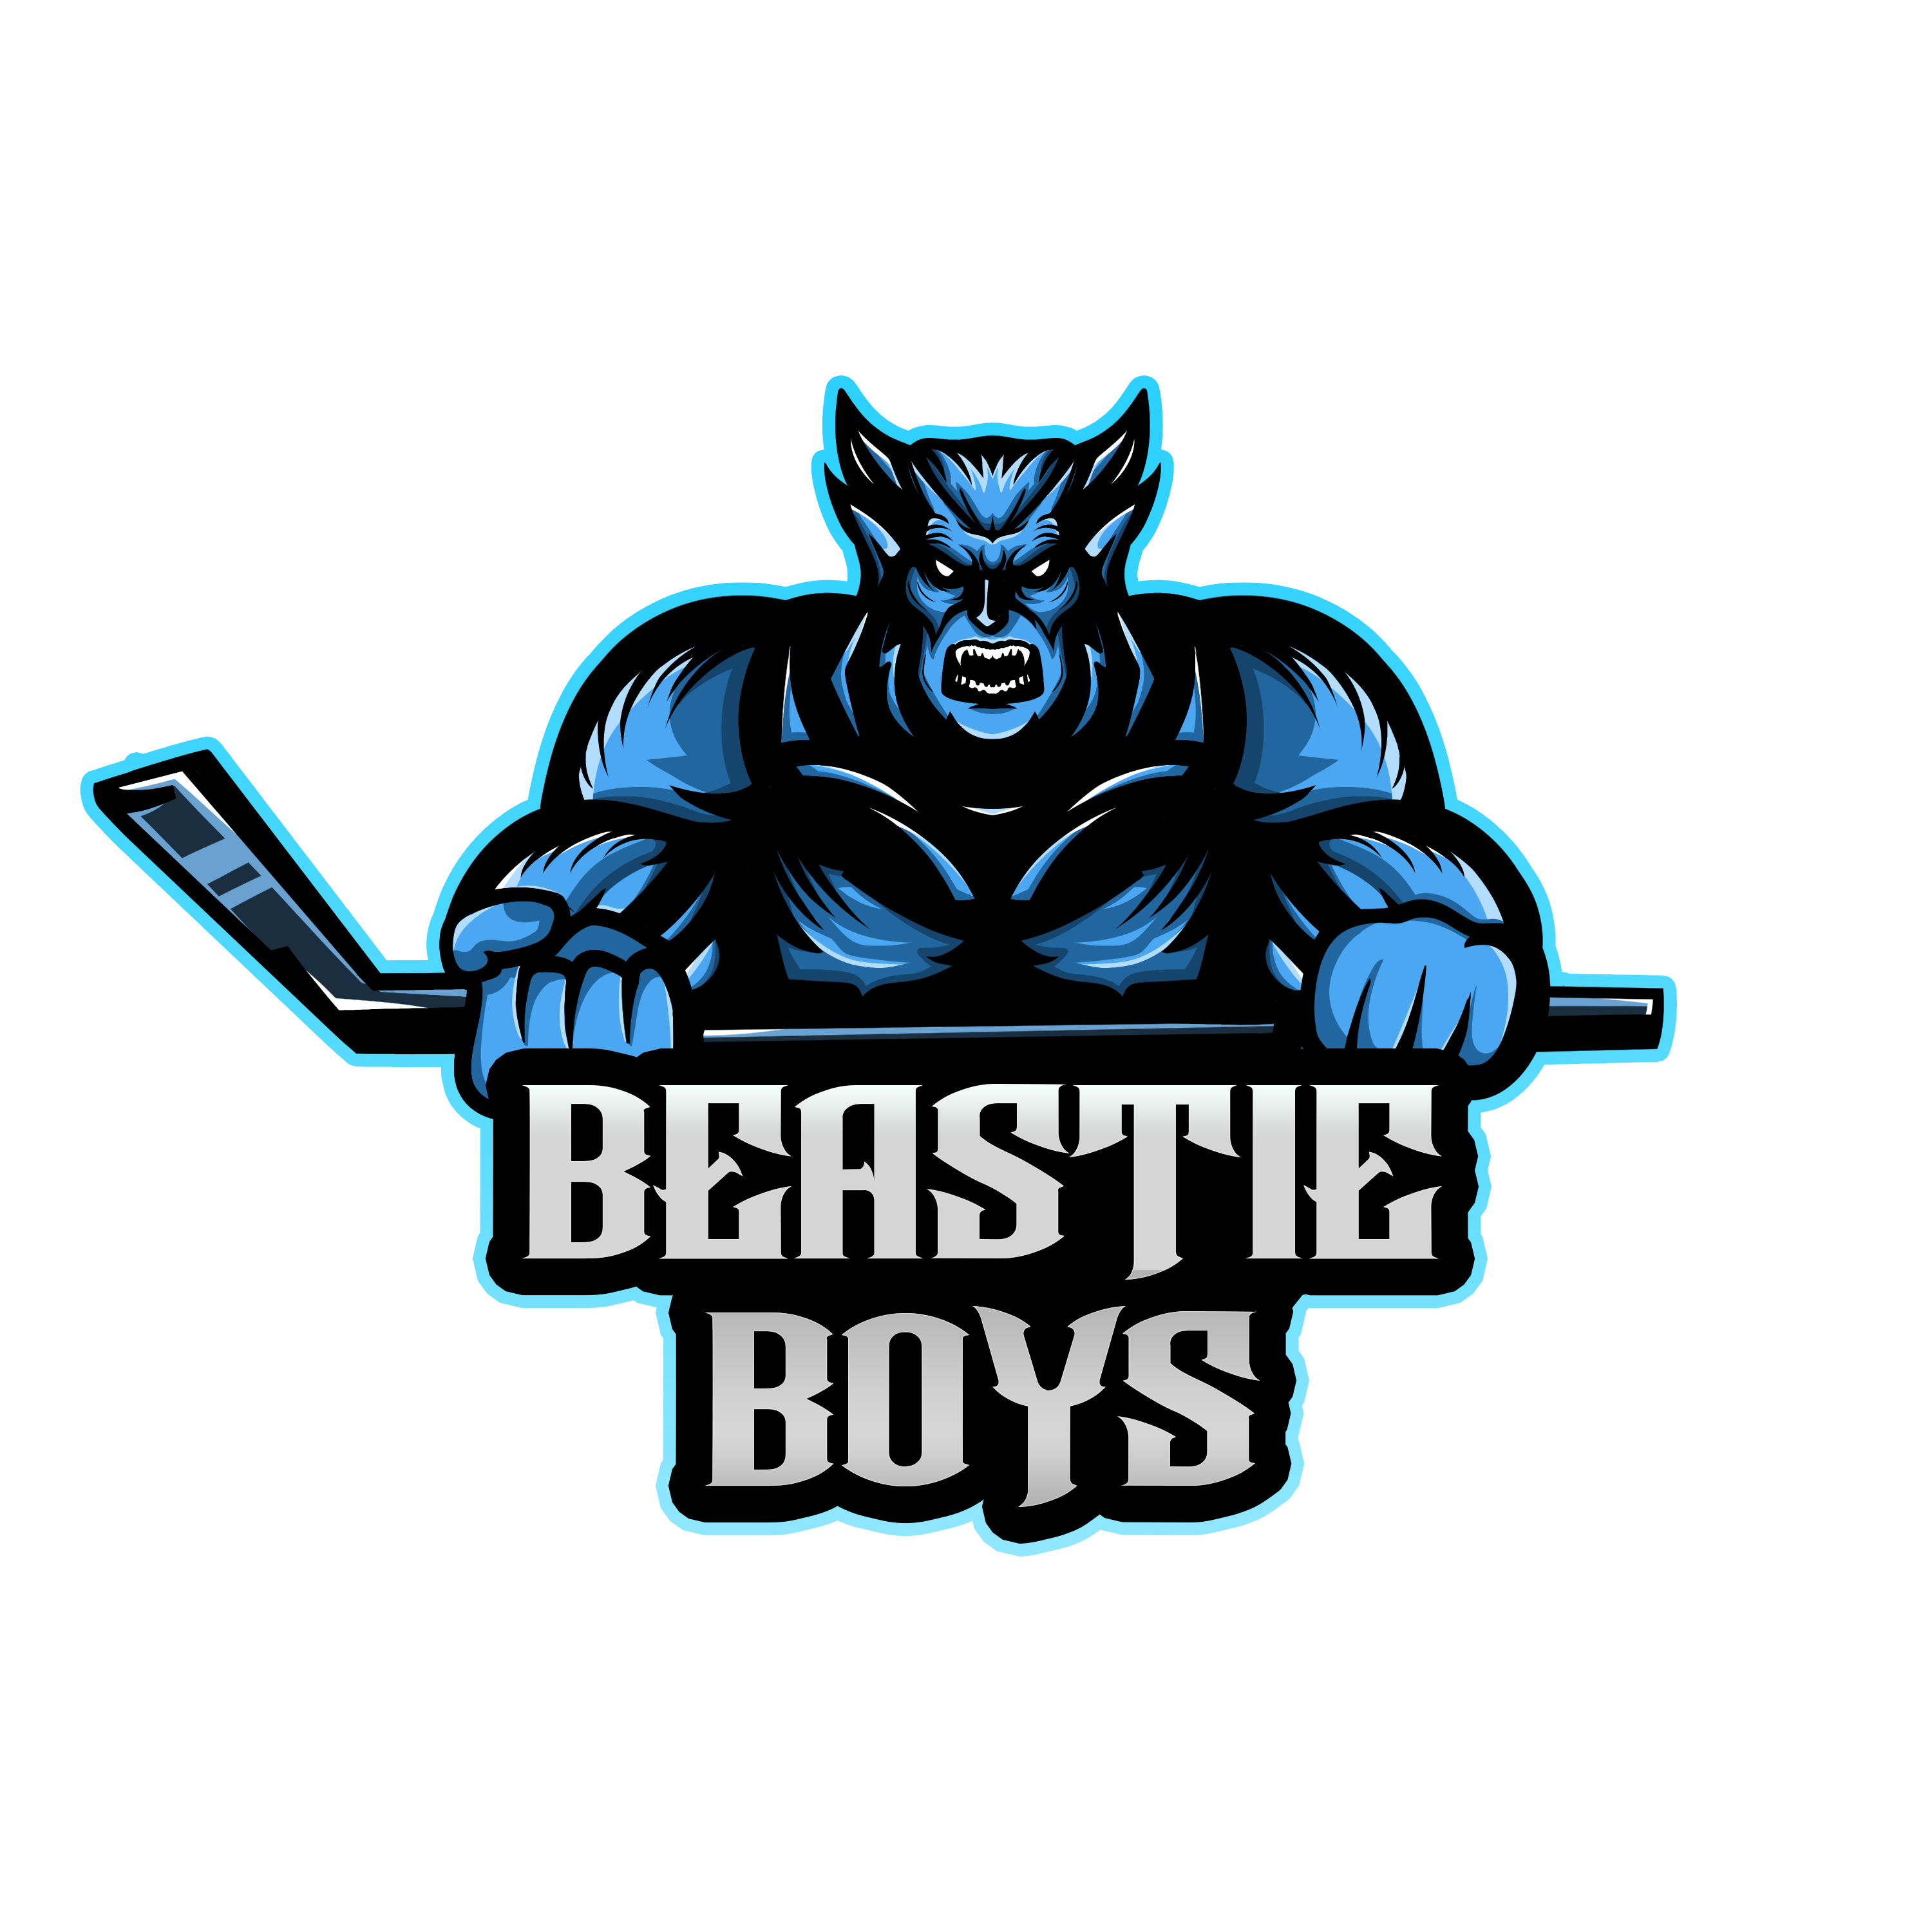 beastie boys logo png